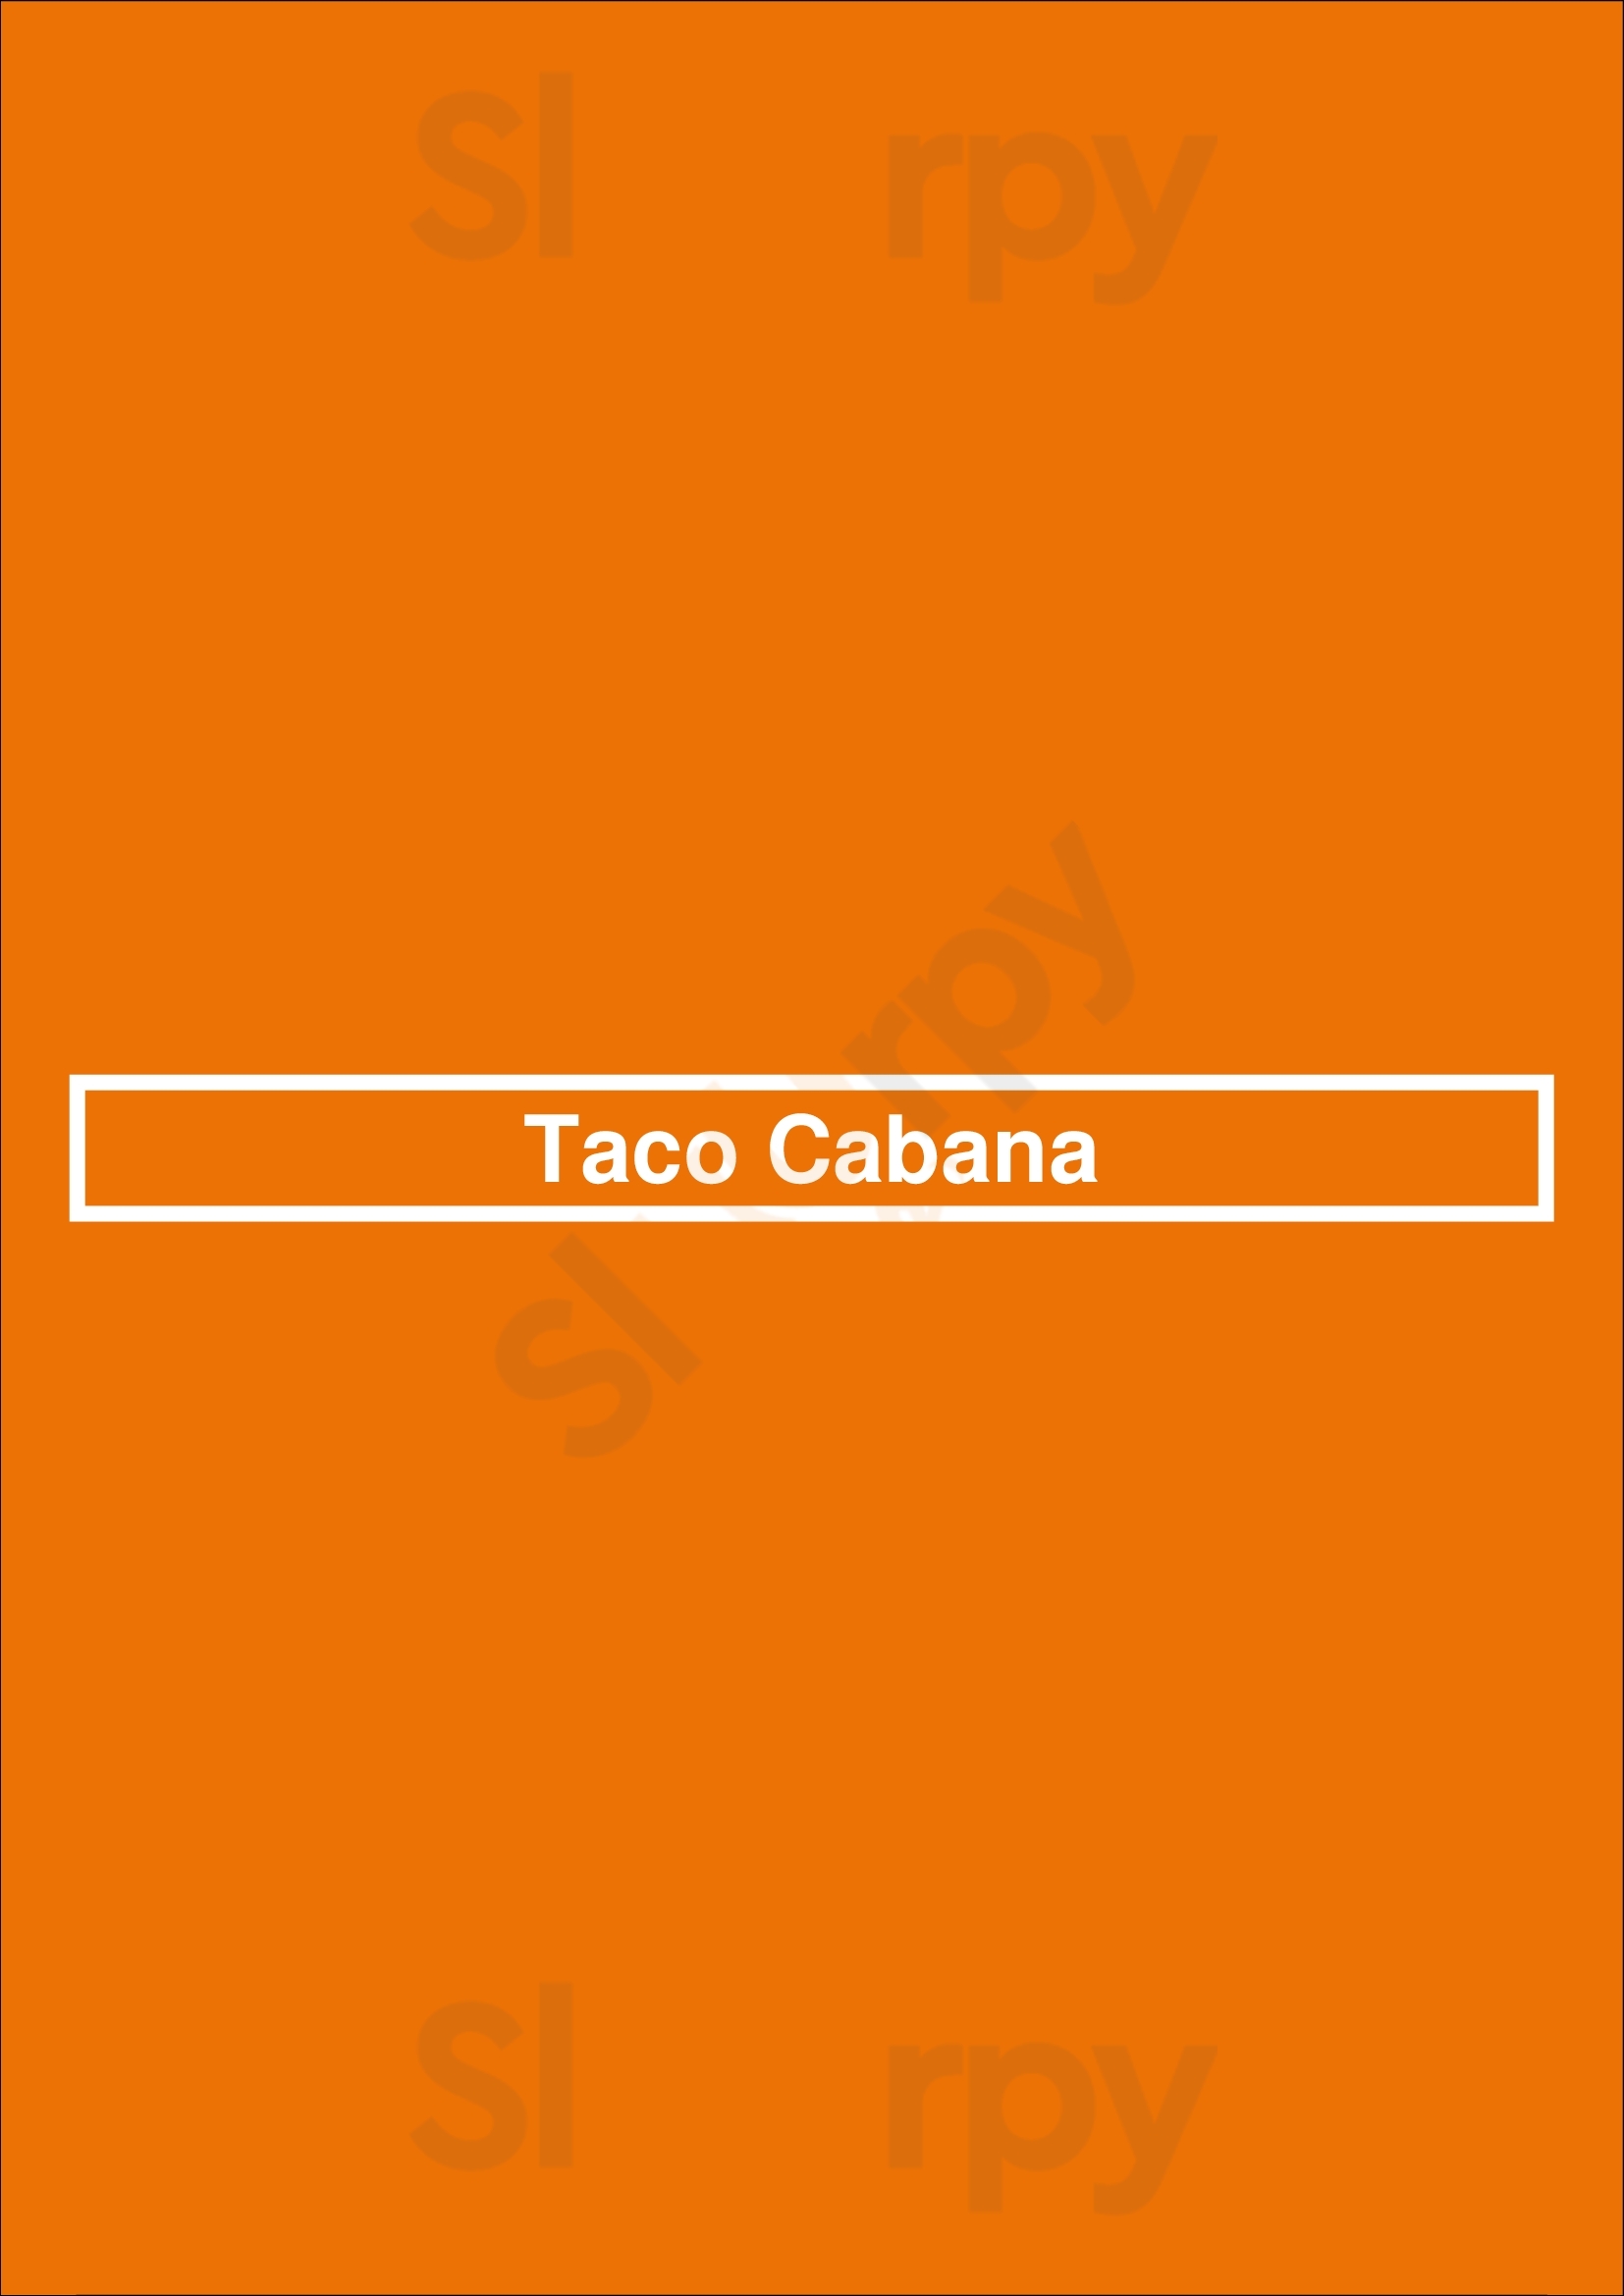 Taco Cabana Austin Menu - 1